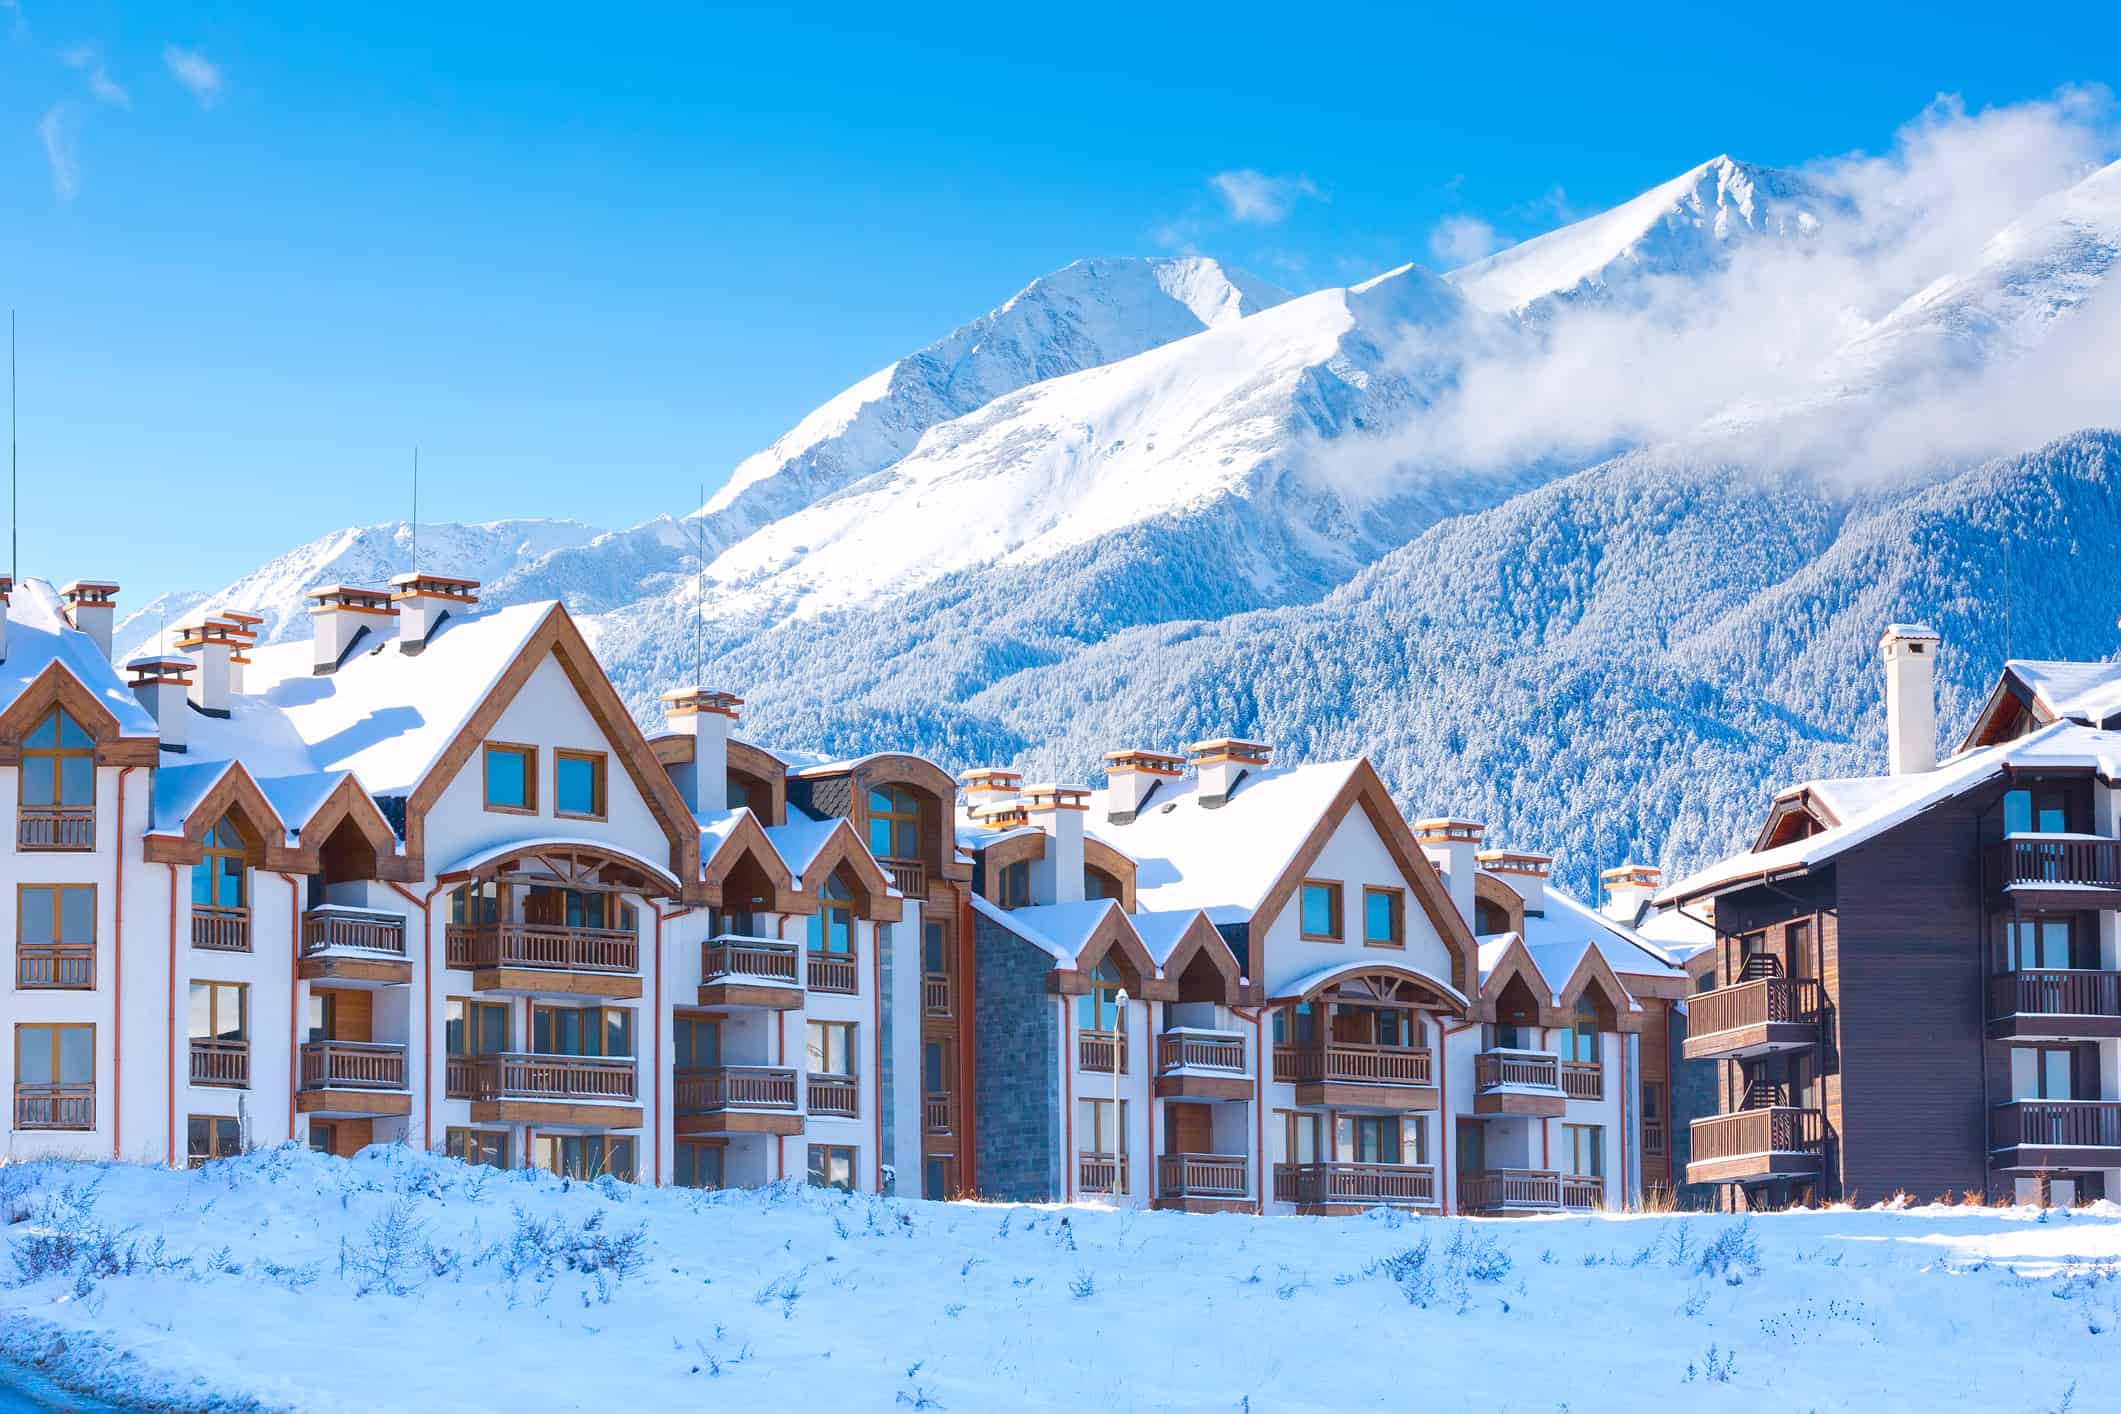 Houses and snow mountains panorama in bulgarian ski resort Bansko